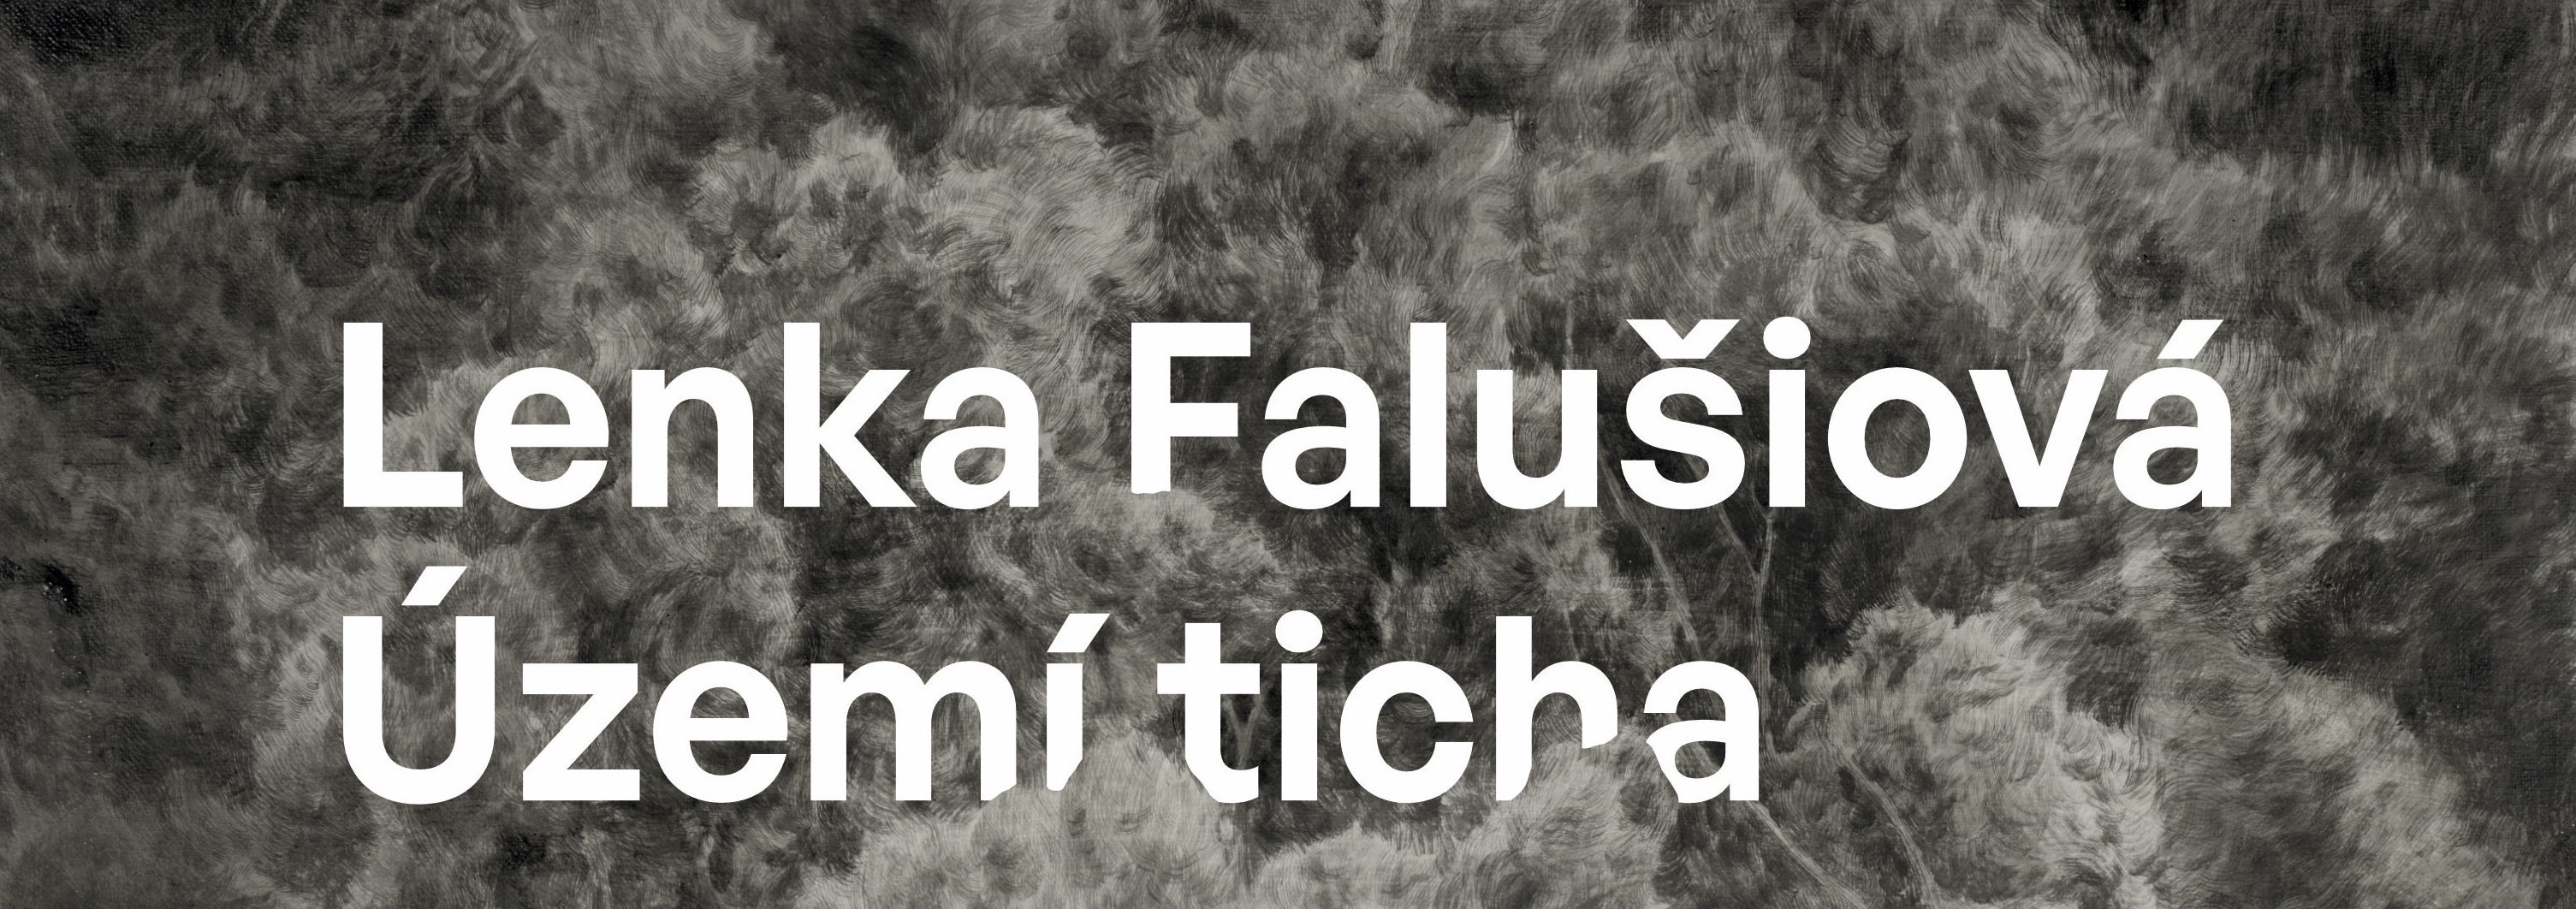 falusiova-banner.jpg